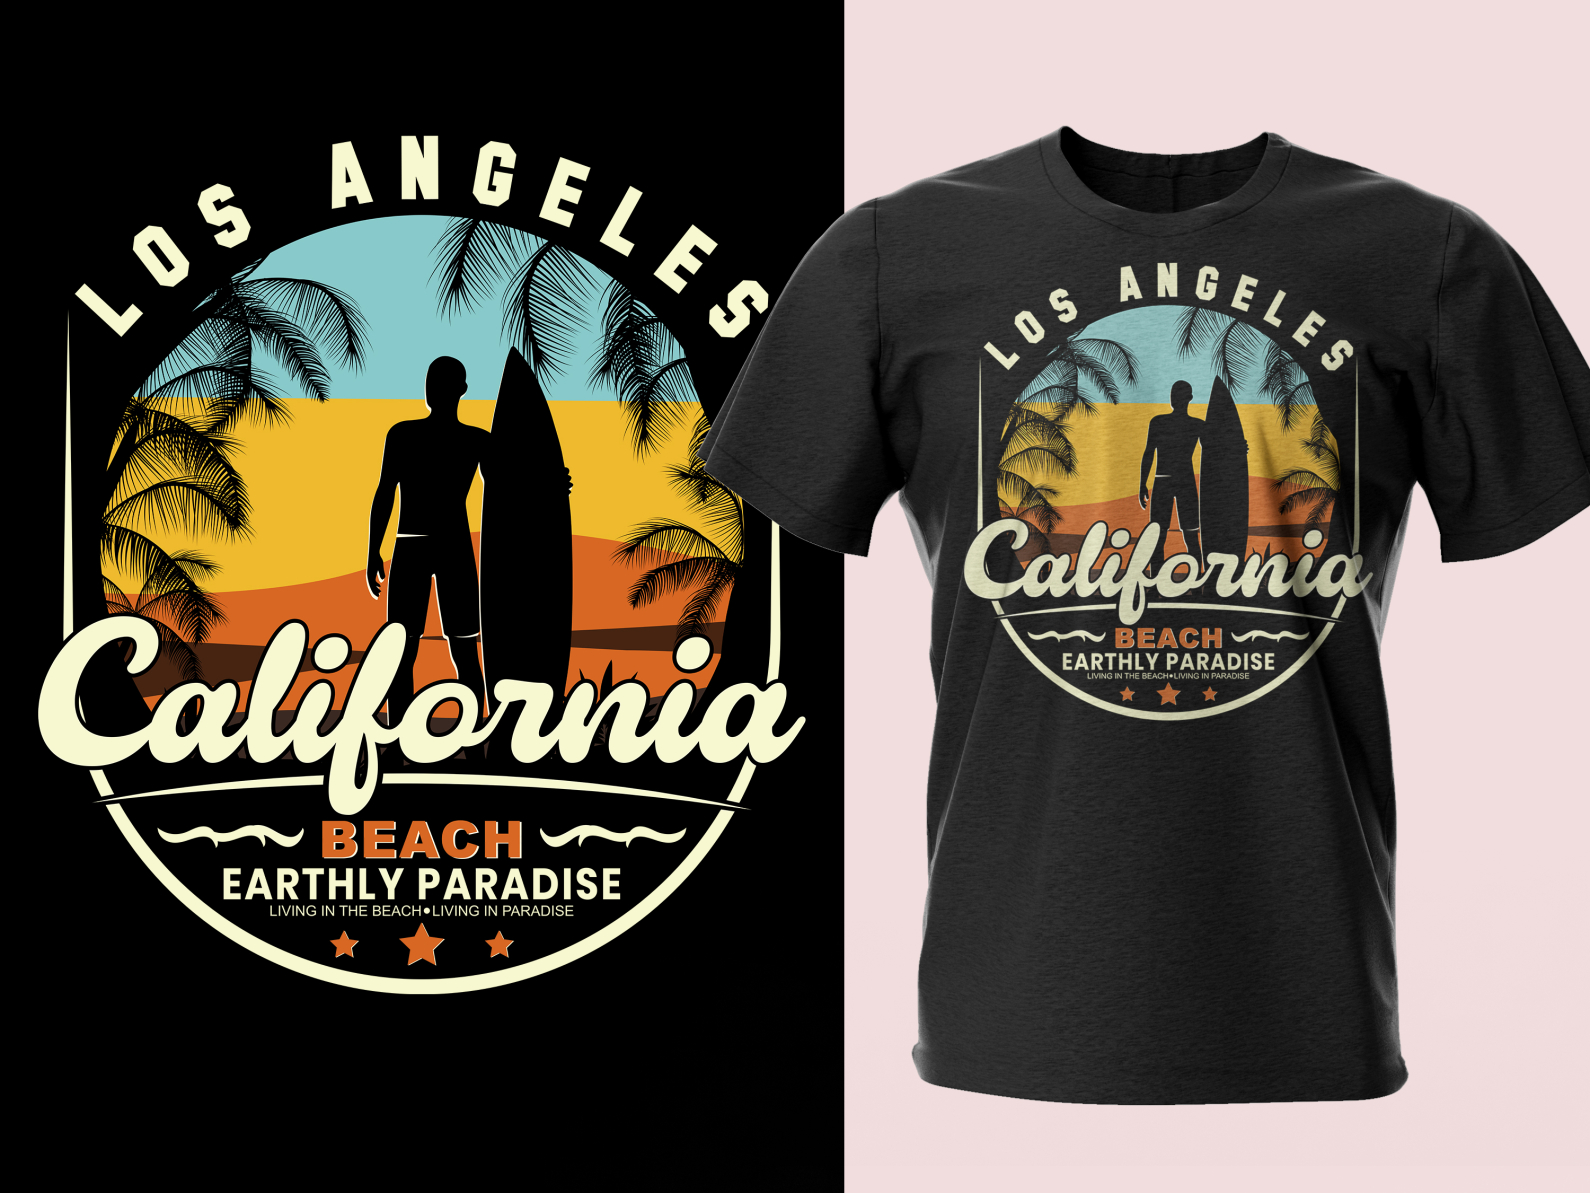 California Beach T shirt Design by sawrav uz-zaman on Dribbble